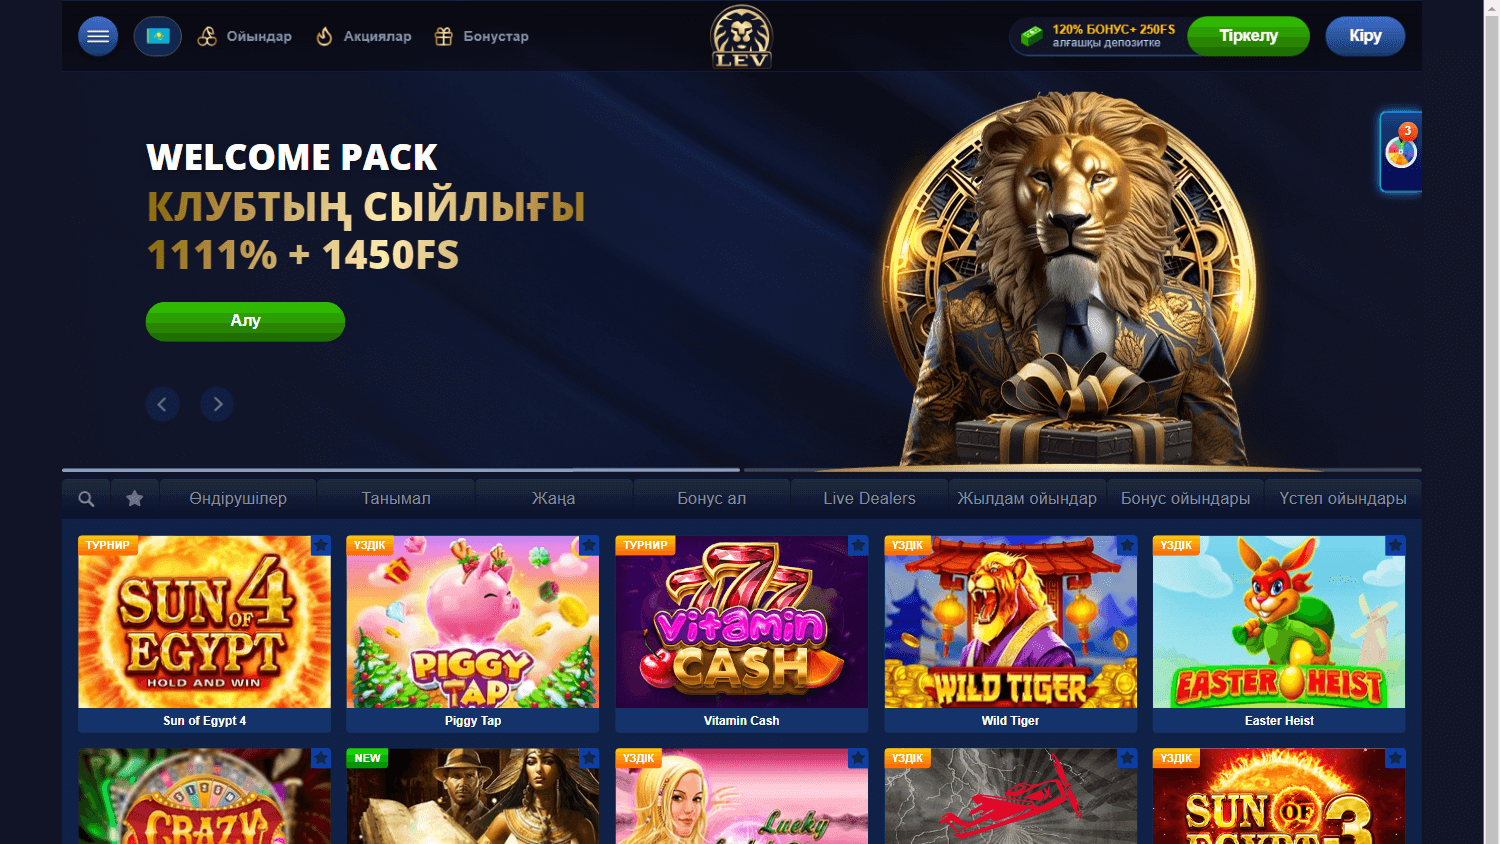 lev_casino_homepage_desktop